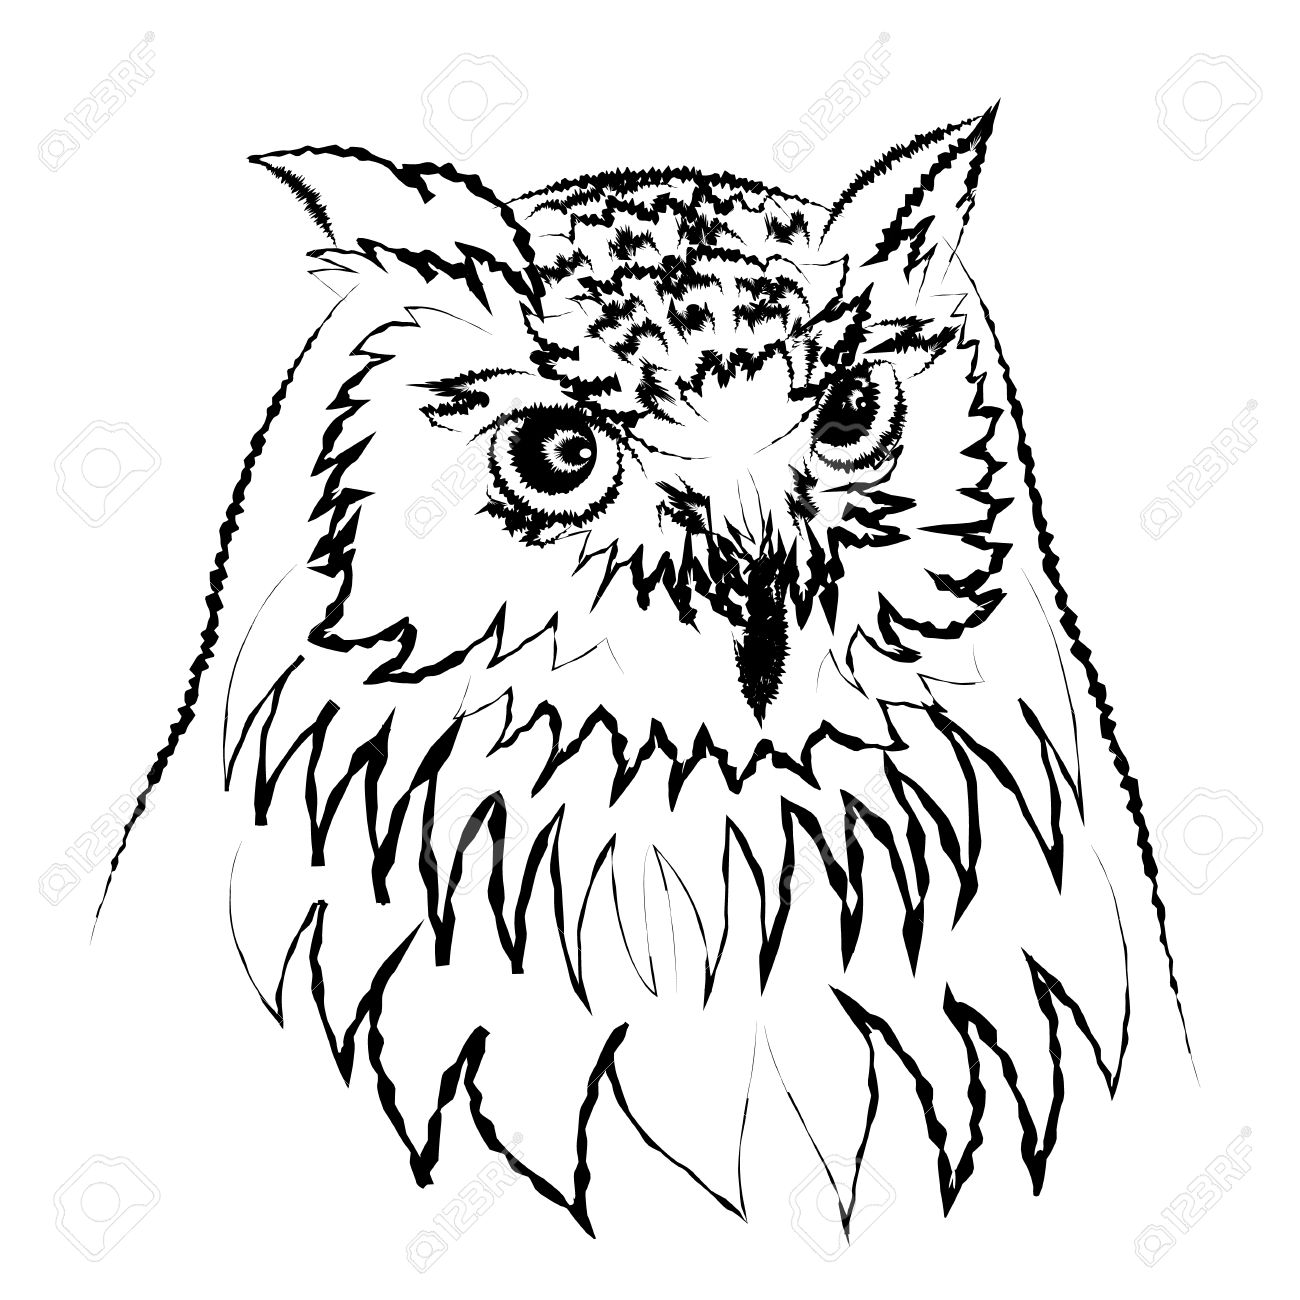 Line Art Of Siberian Eagle Owl, Or Bubo Bubo Sibiricus Vector.